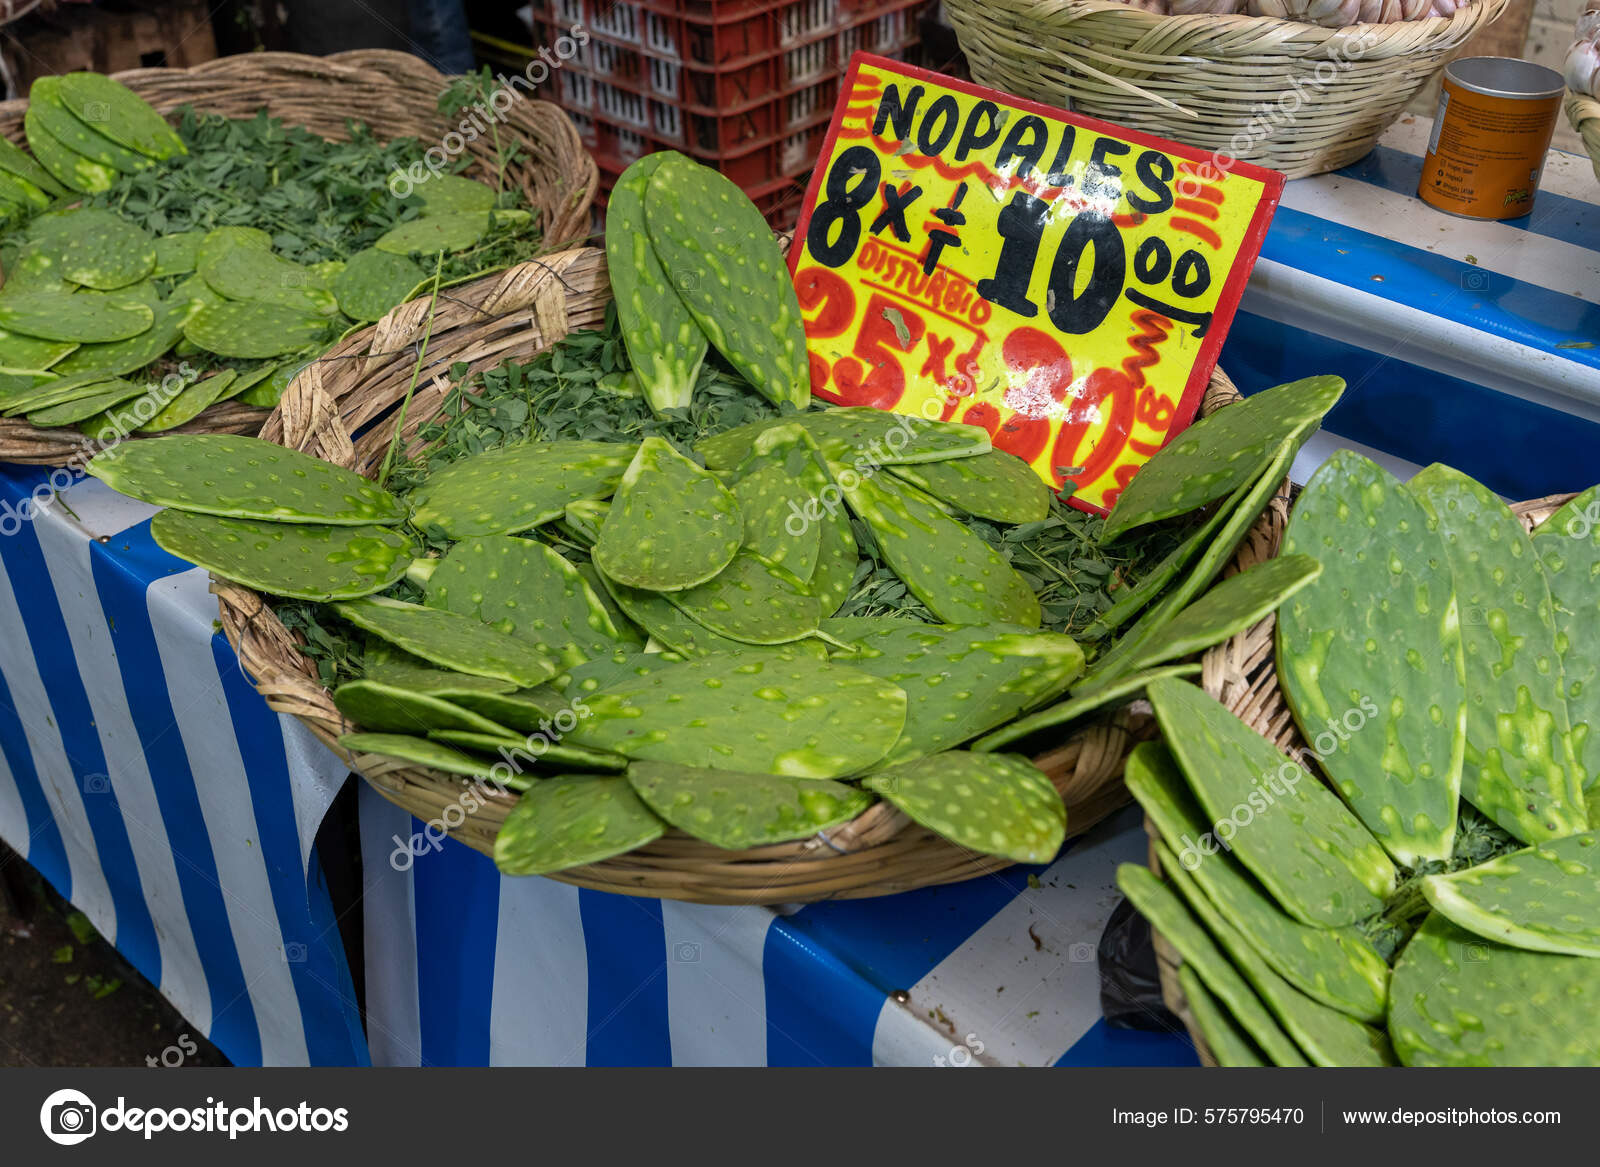 Nopales (cactus) Peeler, Market in Mazatlan, MX